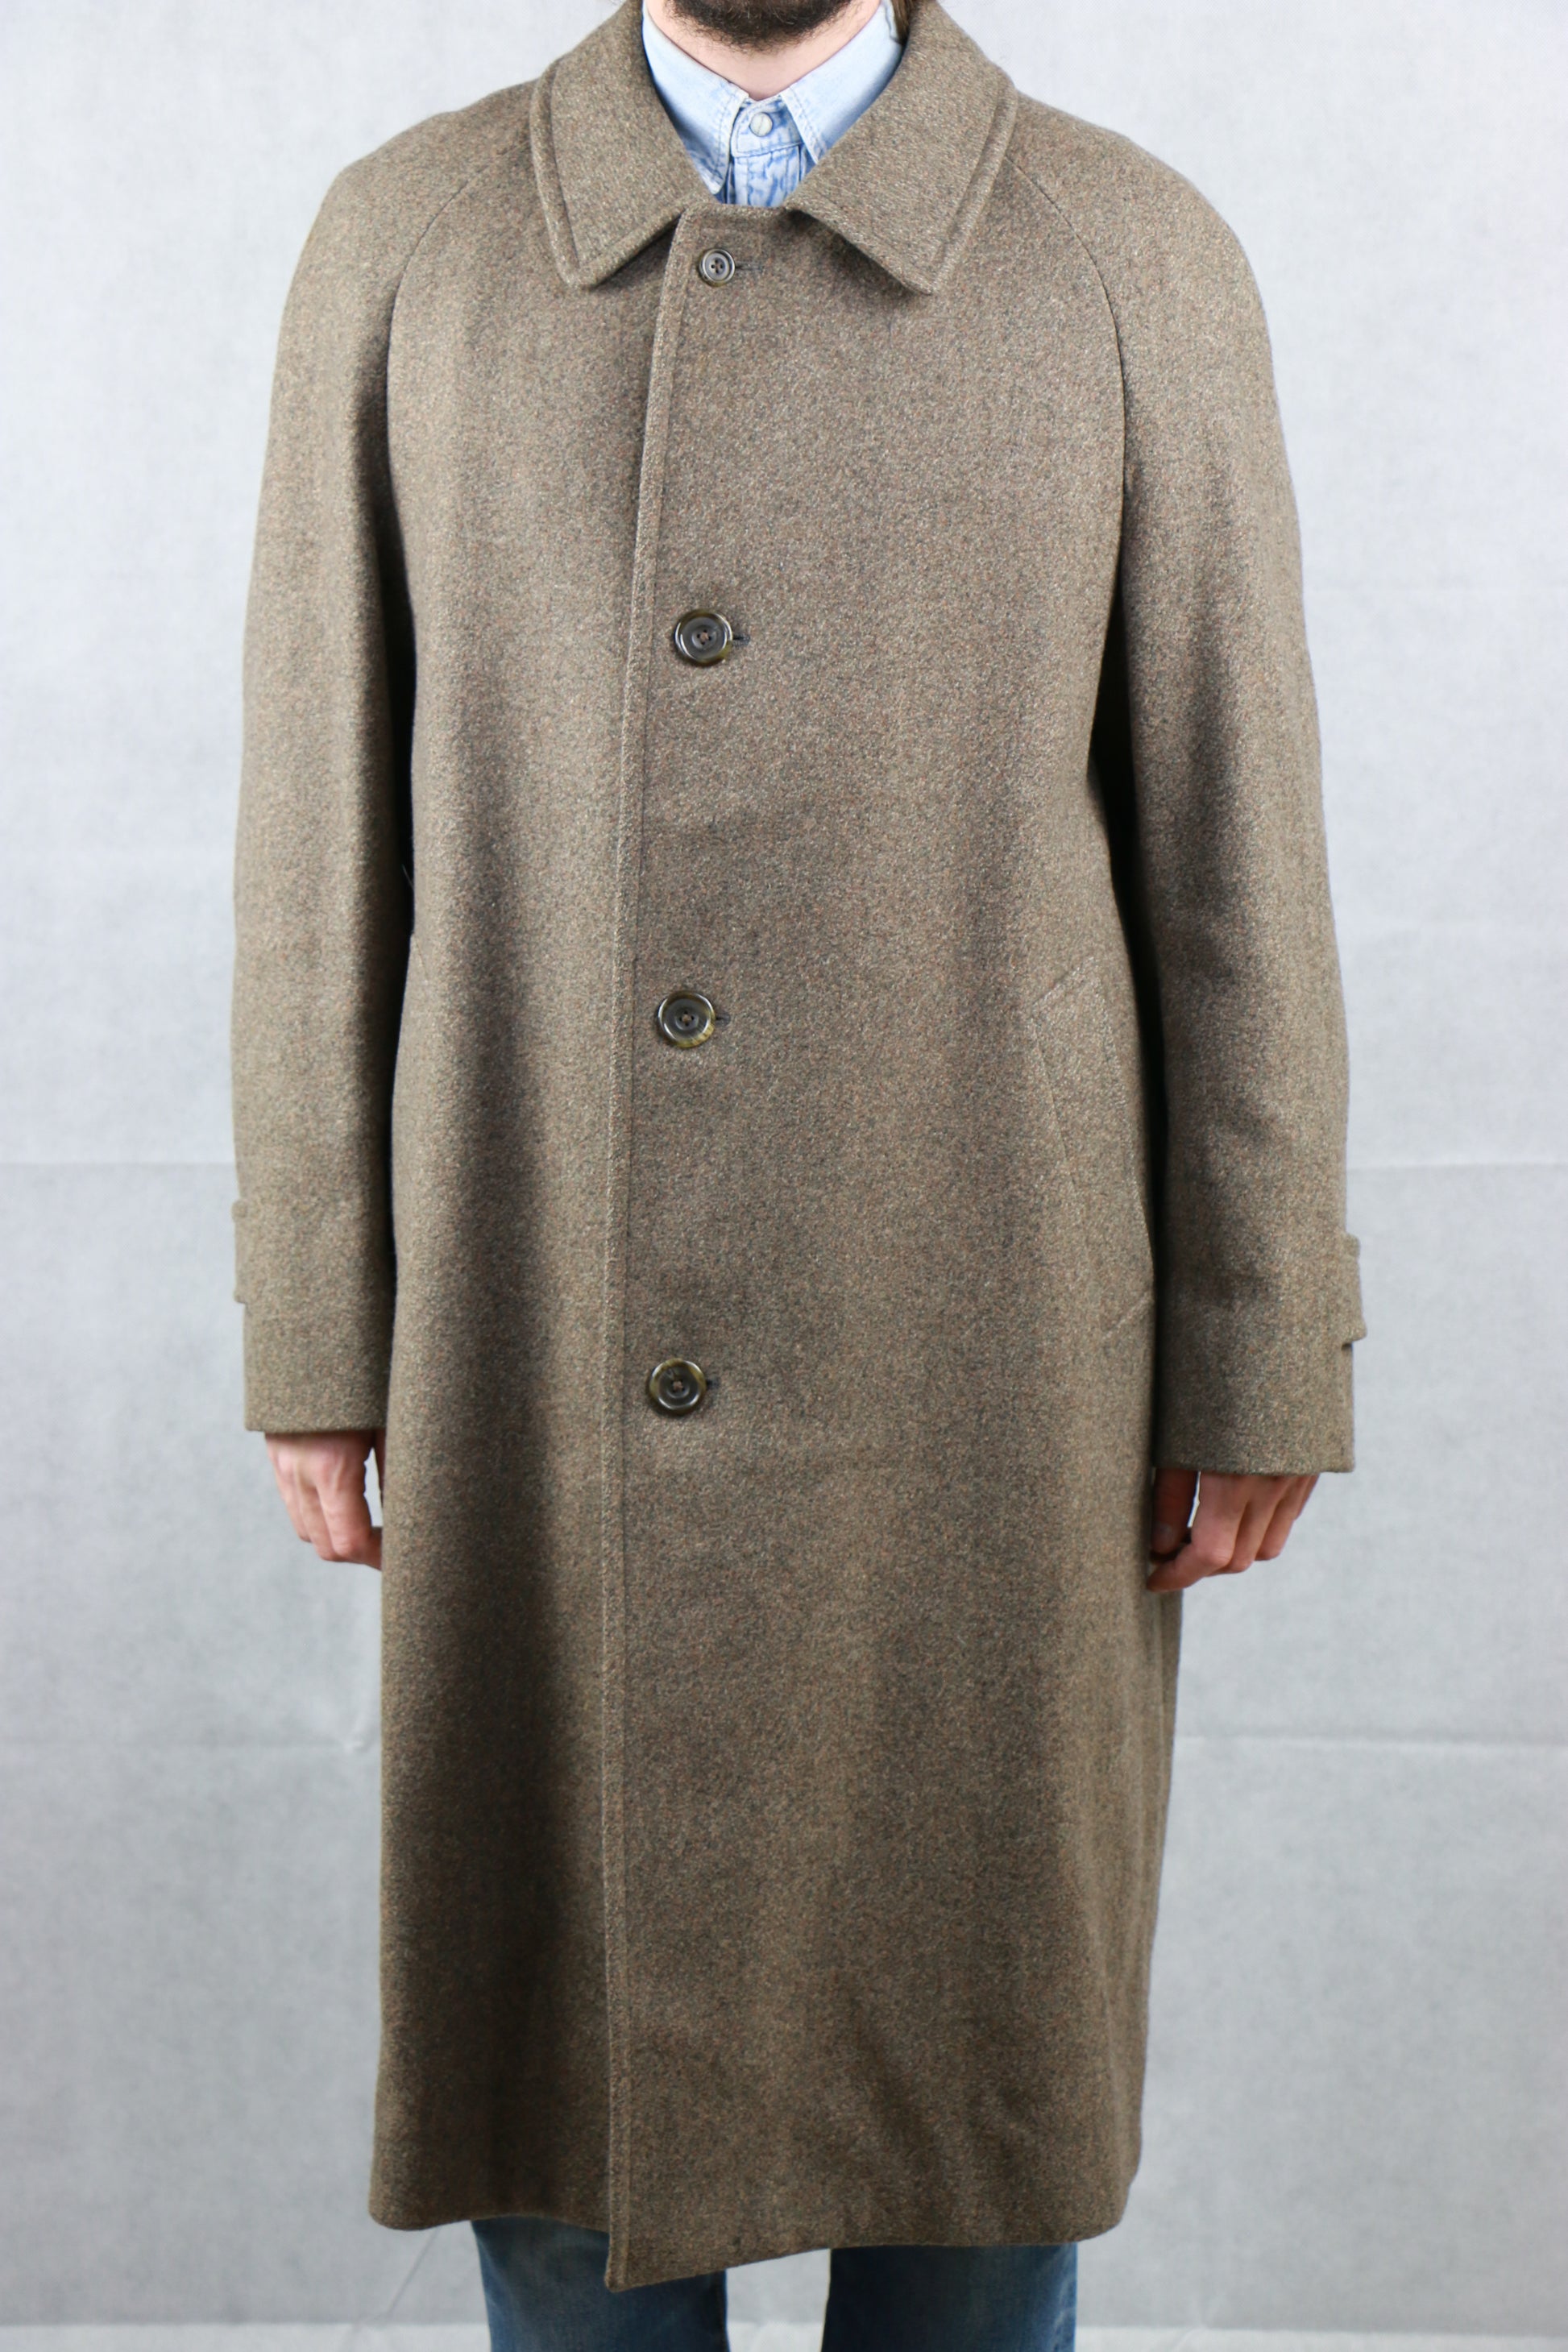 Aquascutum Tweed Coat - vintage clothing clochard92.com